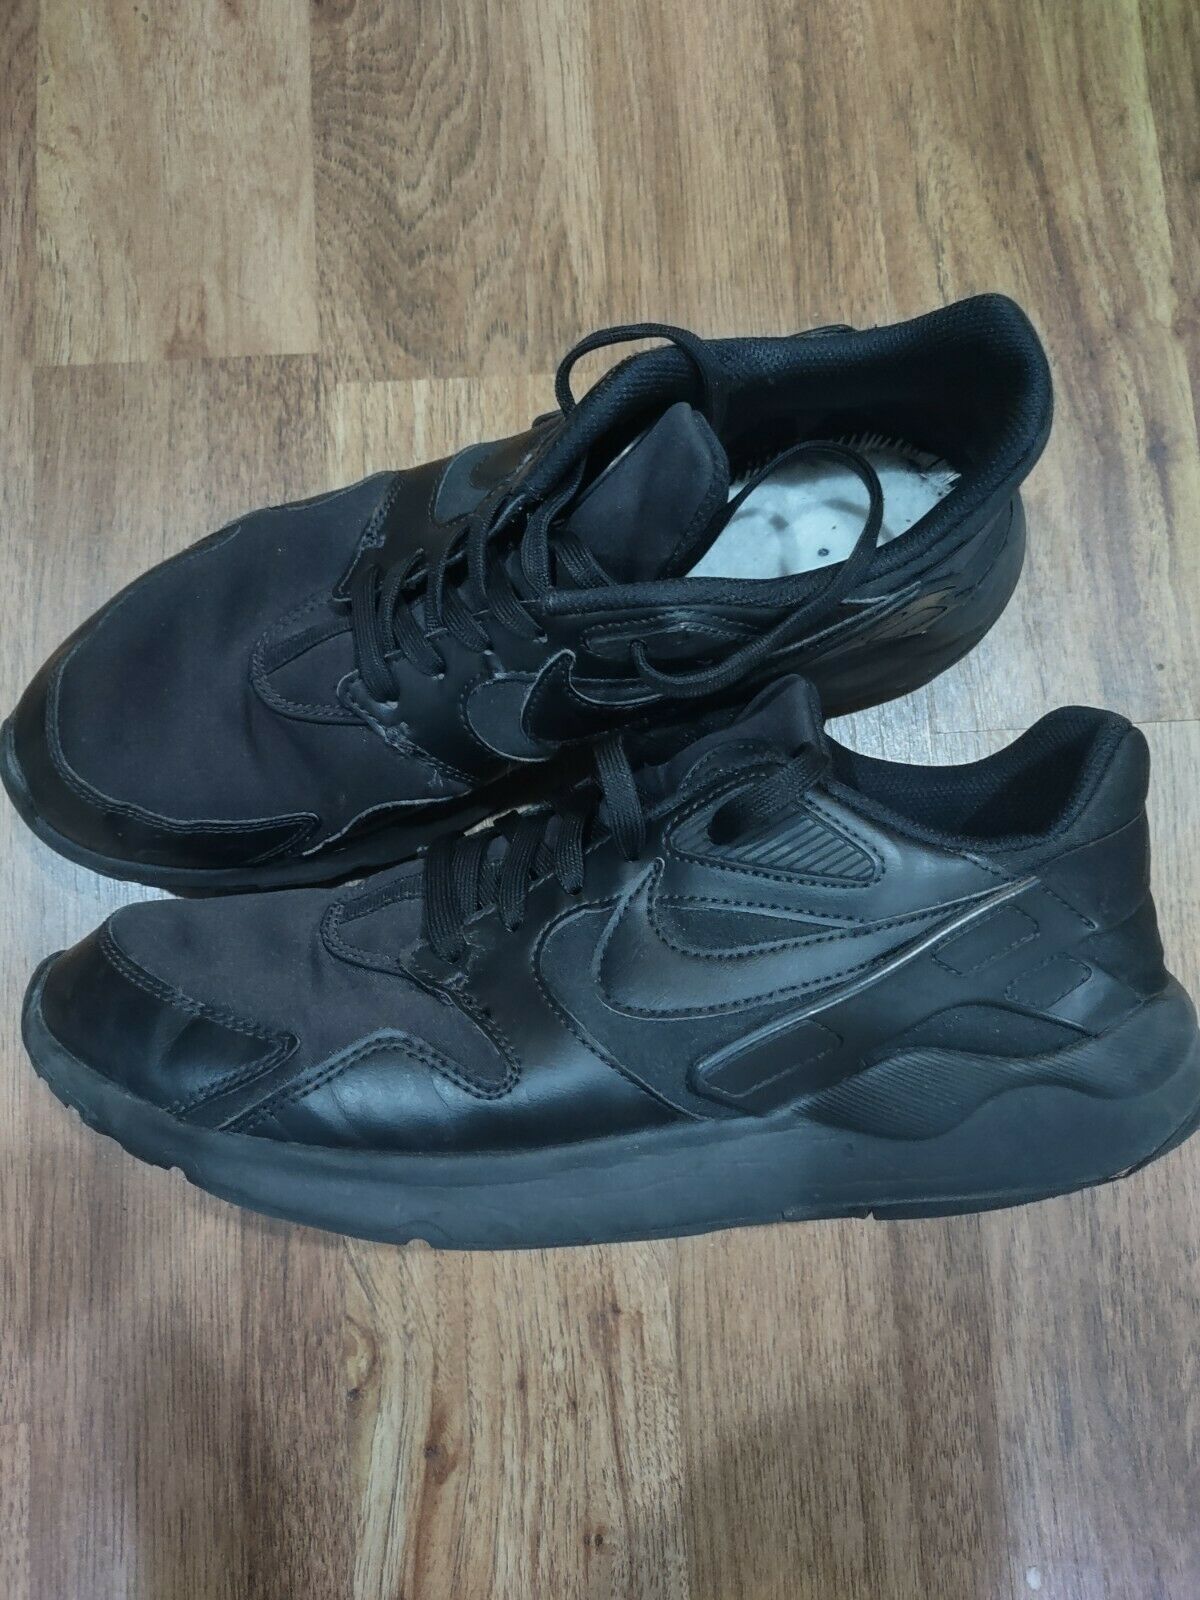 Nike Mens Shoes 11.5 Black NO INSOLES